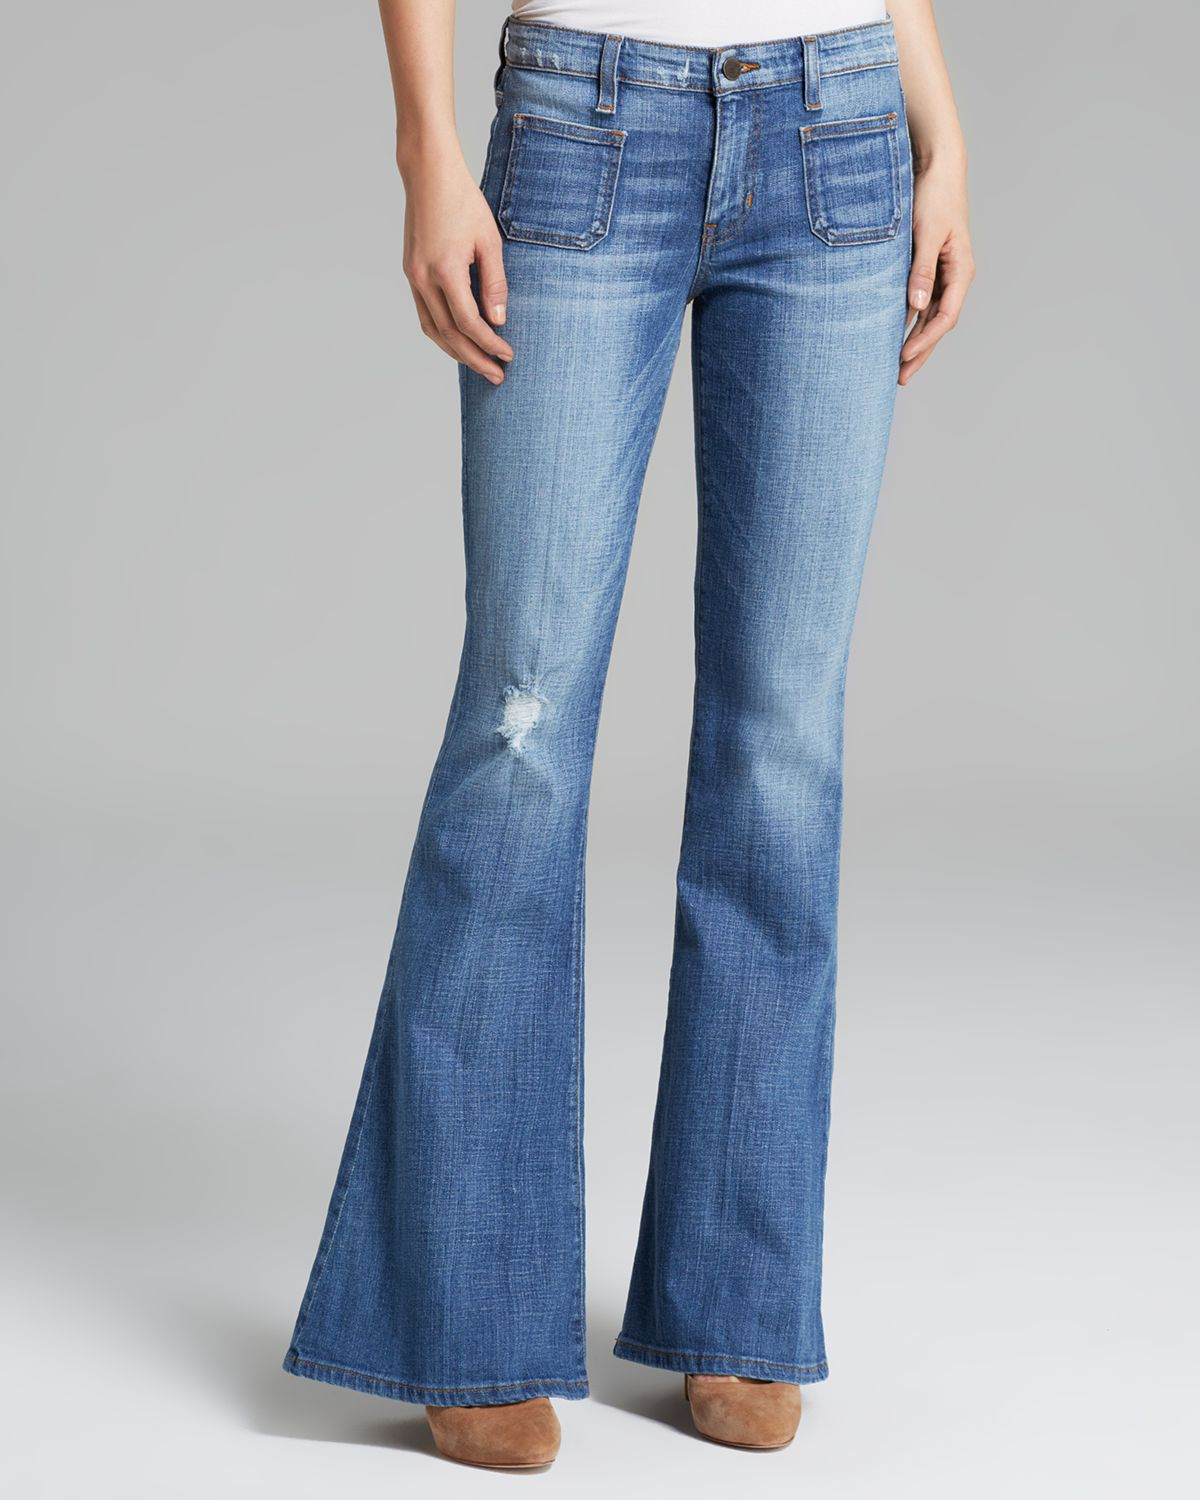 Guess Jeans 70s Flare in Rossen Wash in Blue (Rossen Wash) | Lyst